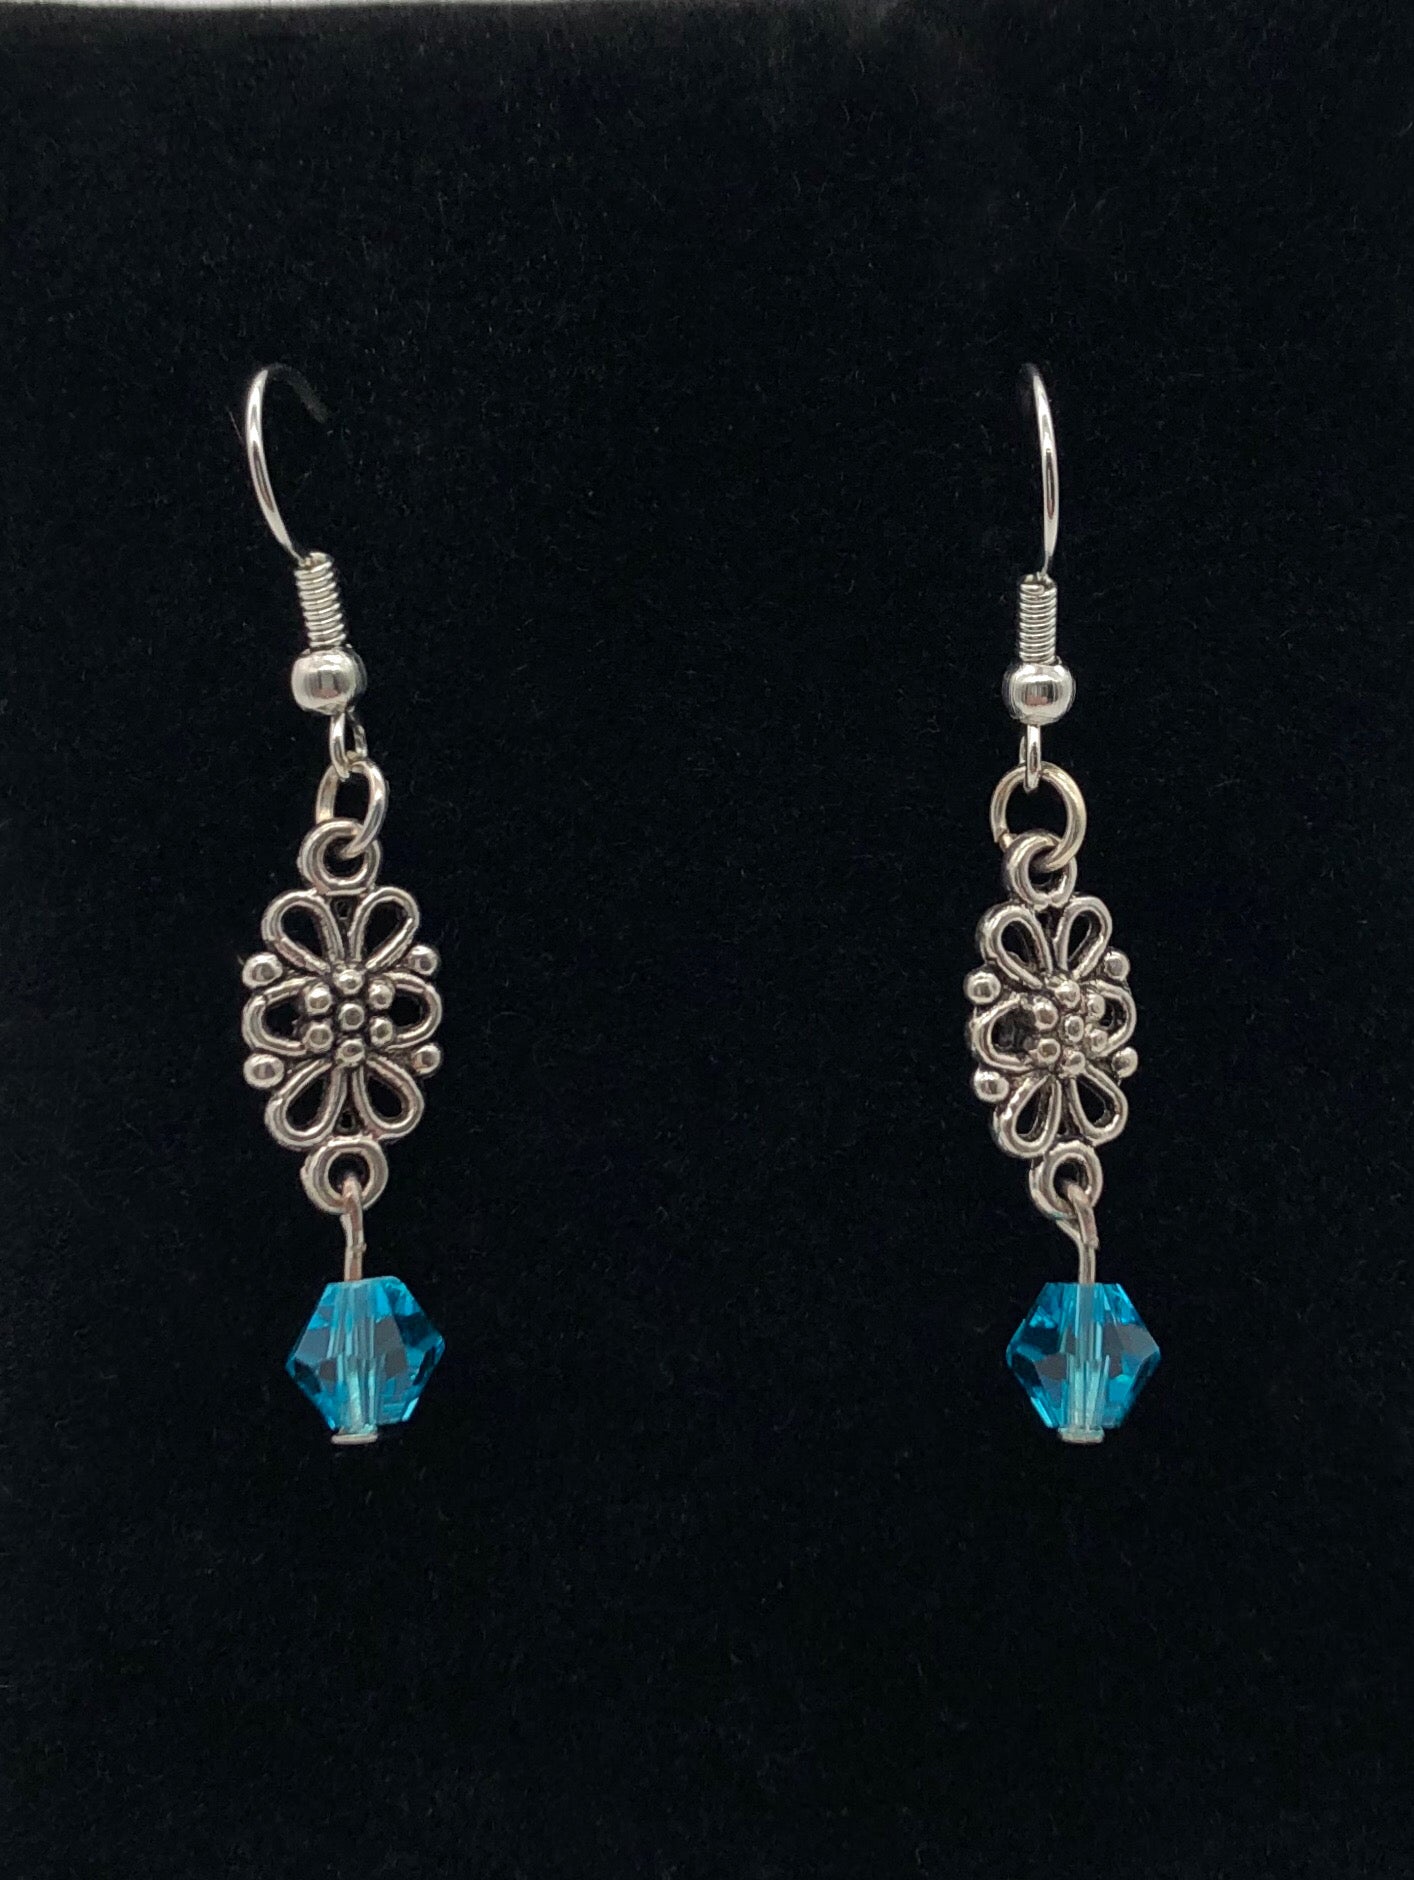 Aqua bead flower drop earrings